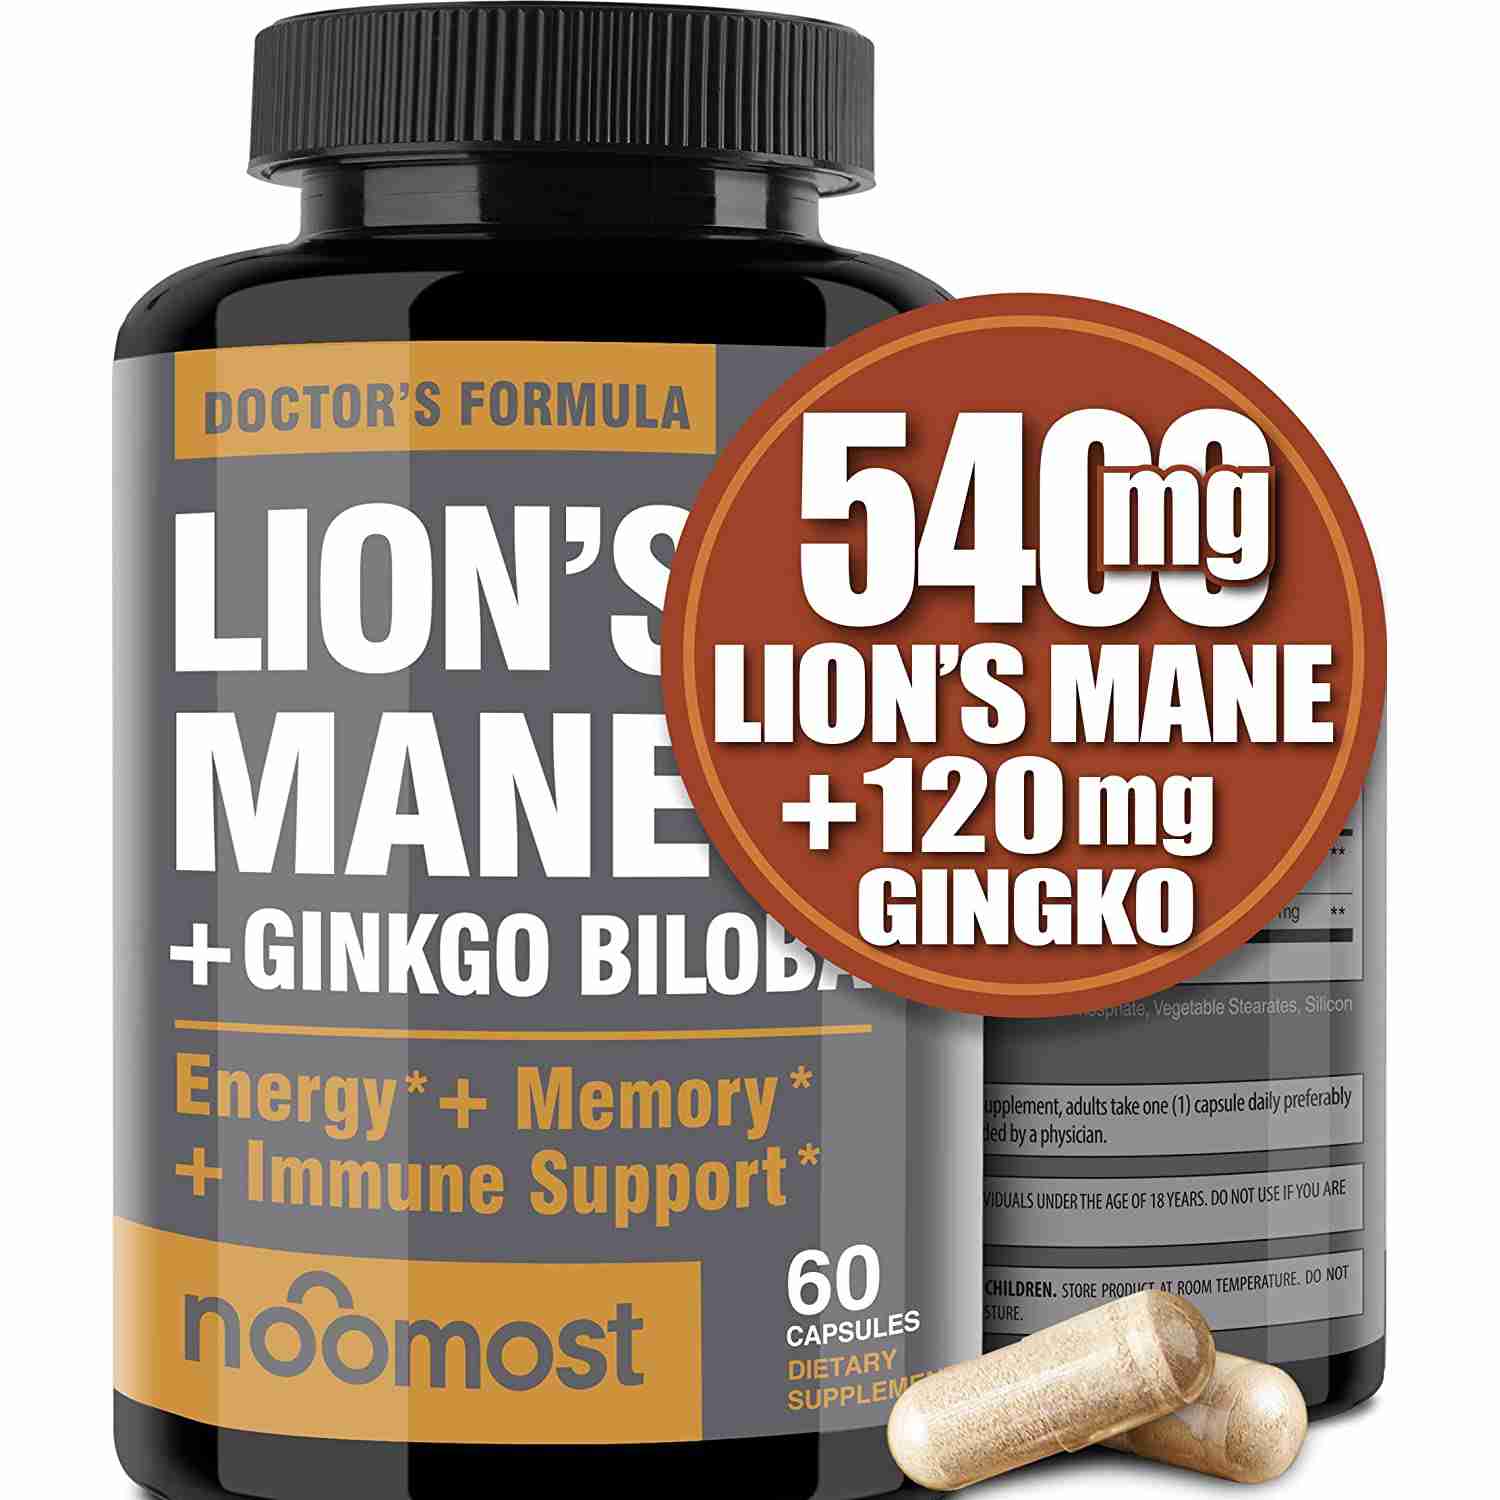 lions-mane-supplement with cash back rebate